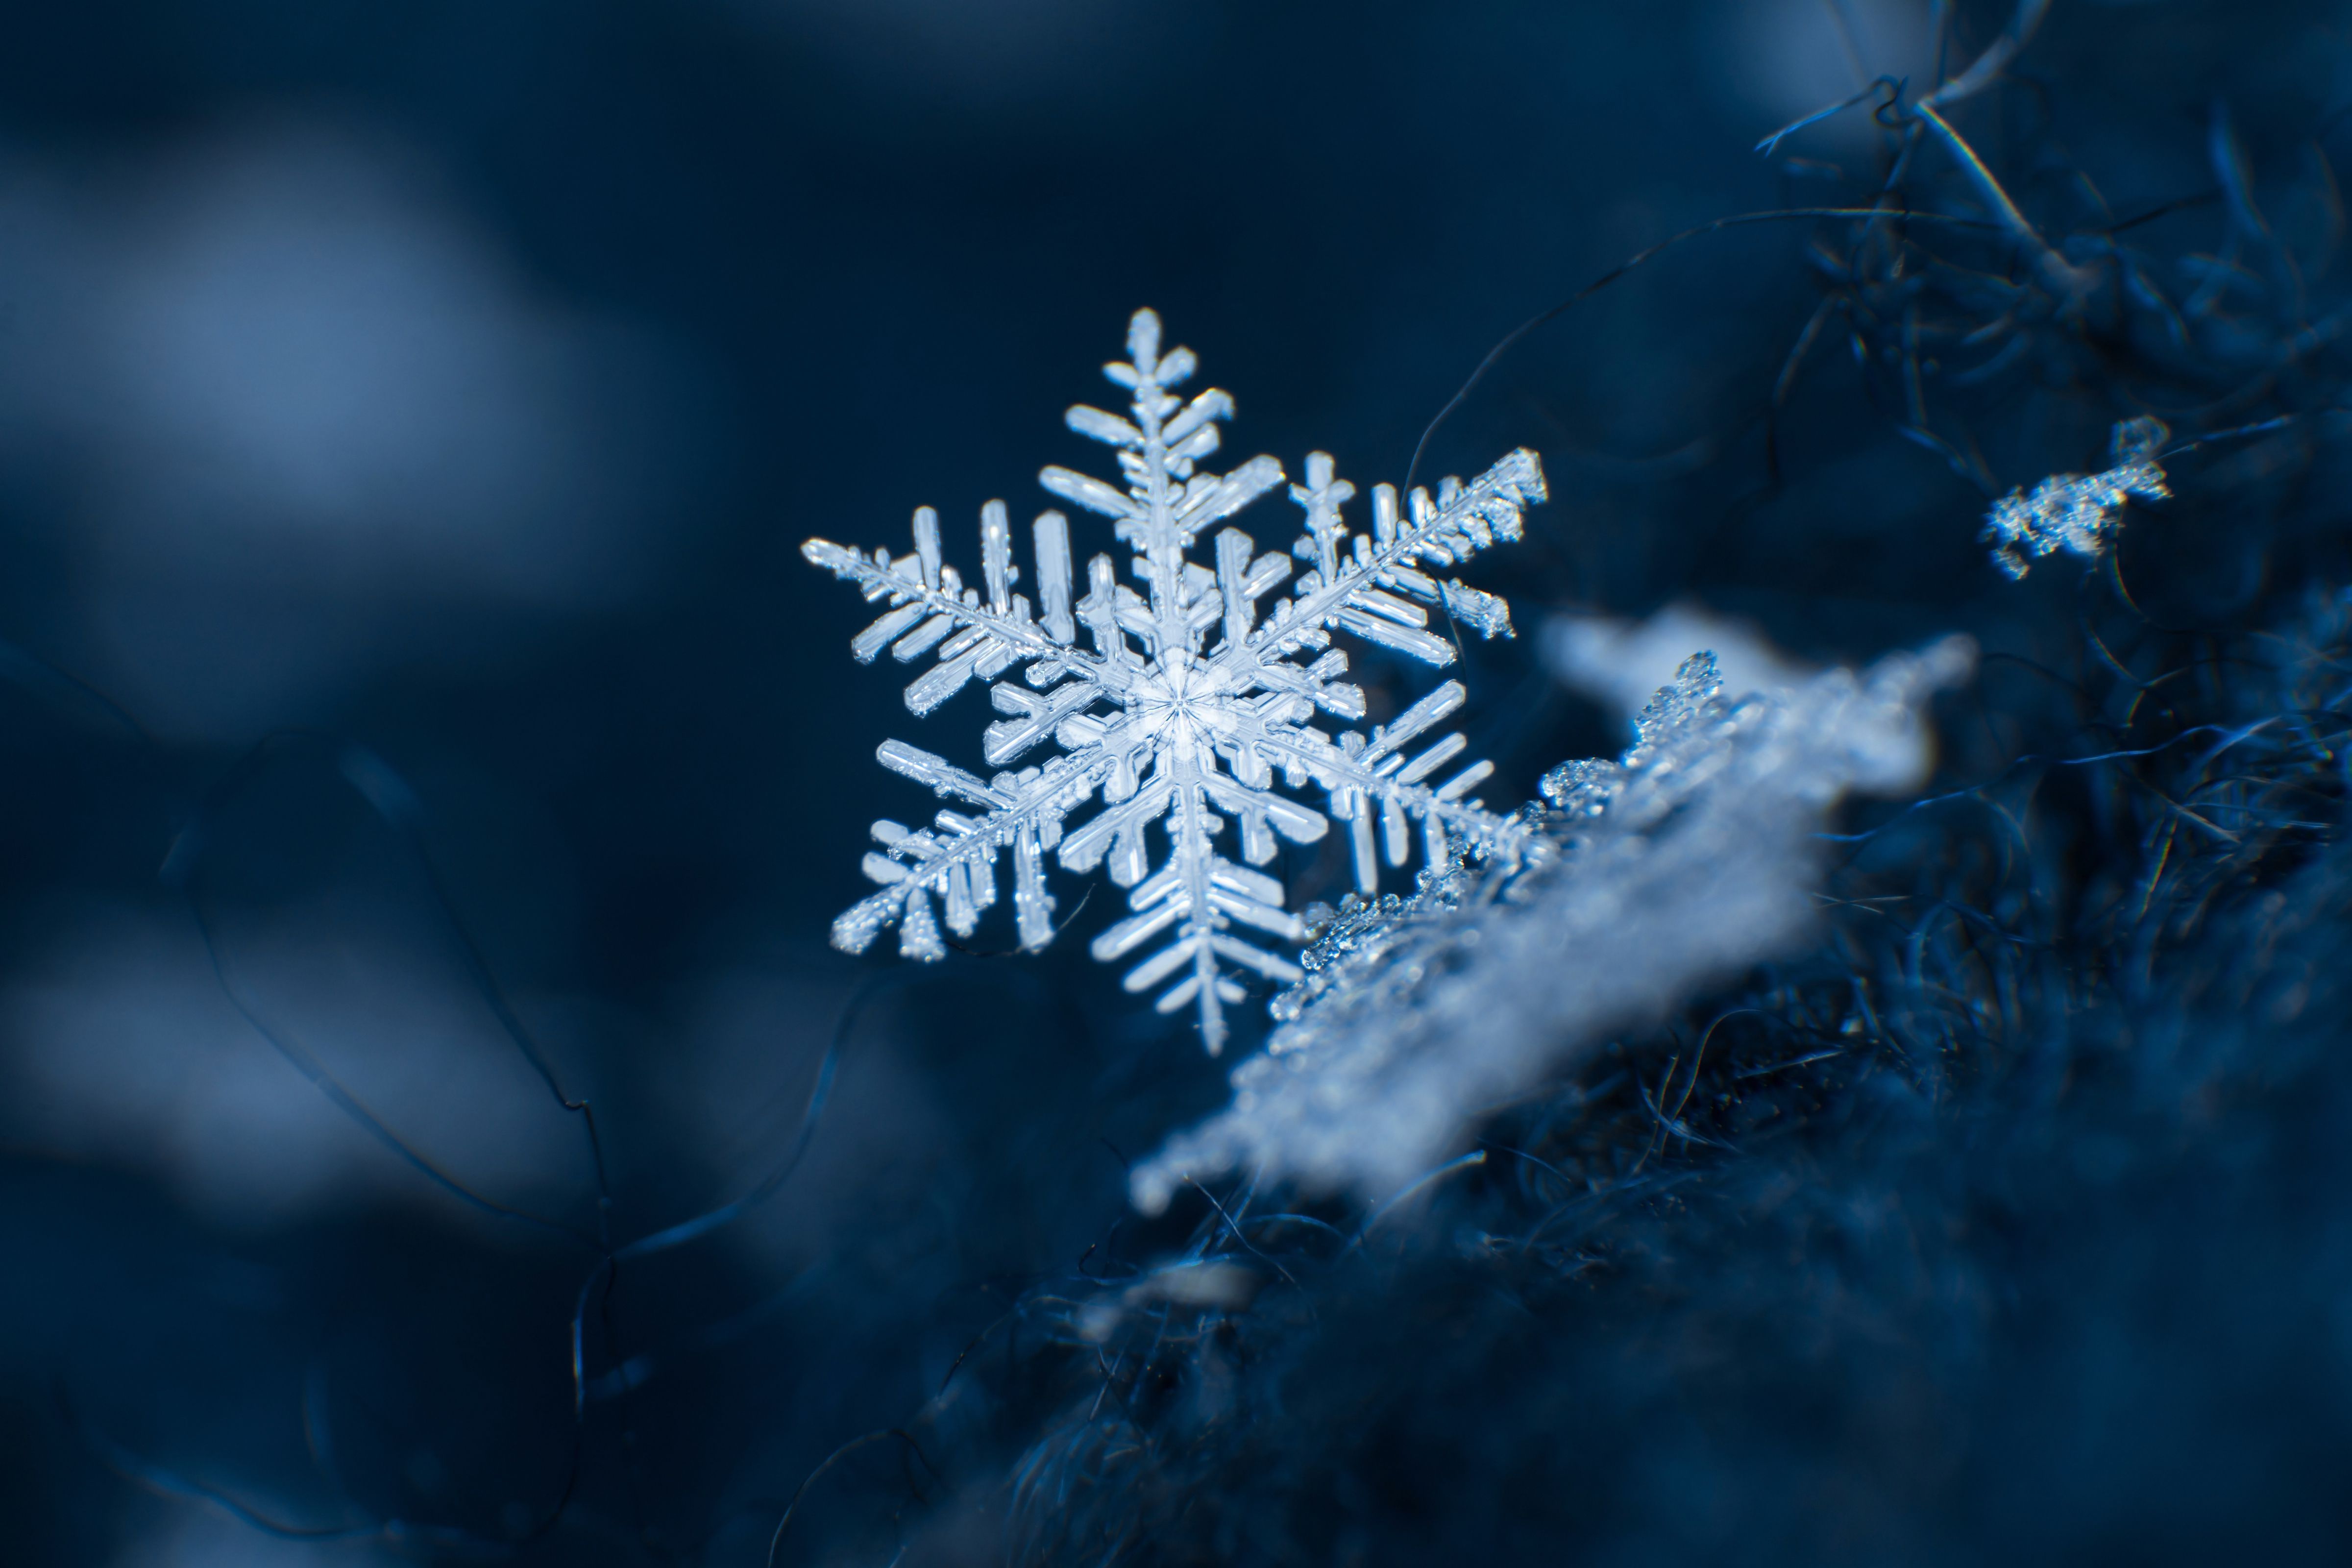 Perfect Snowflakes Captured in Photo. Snowflakes, Ice aesthetic, Snowflake photo